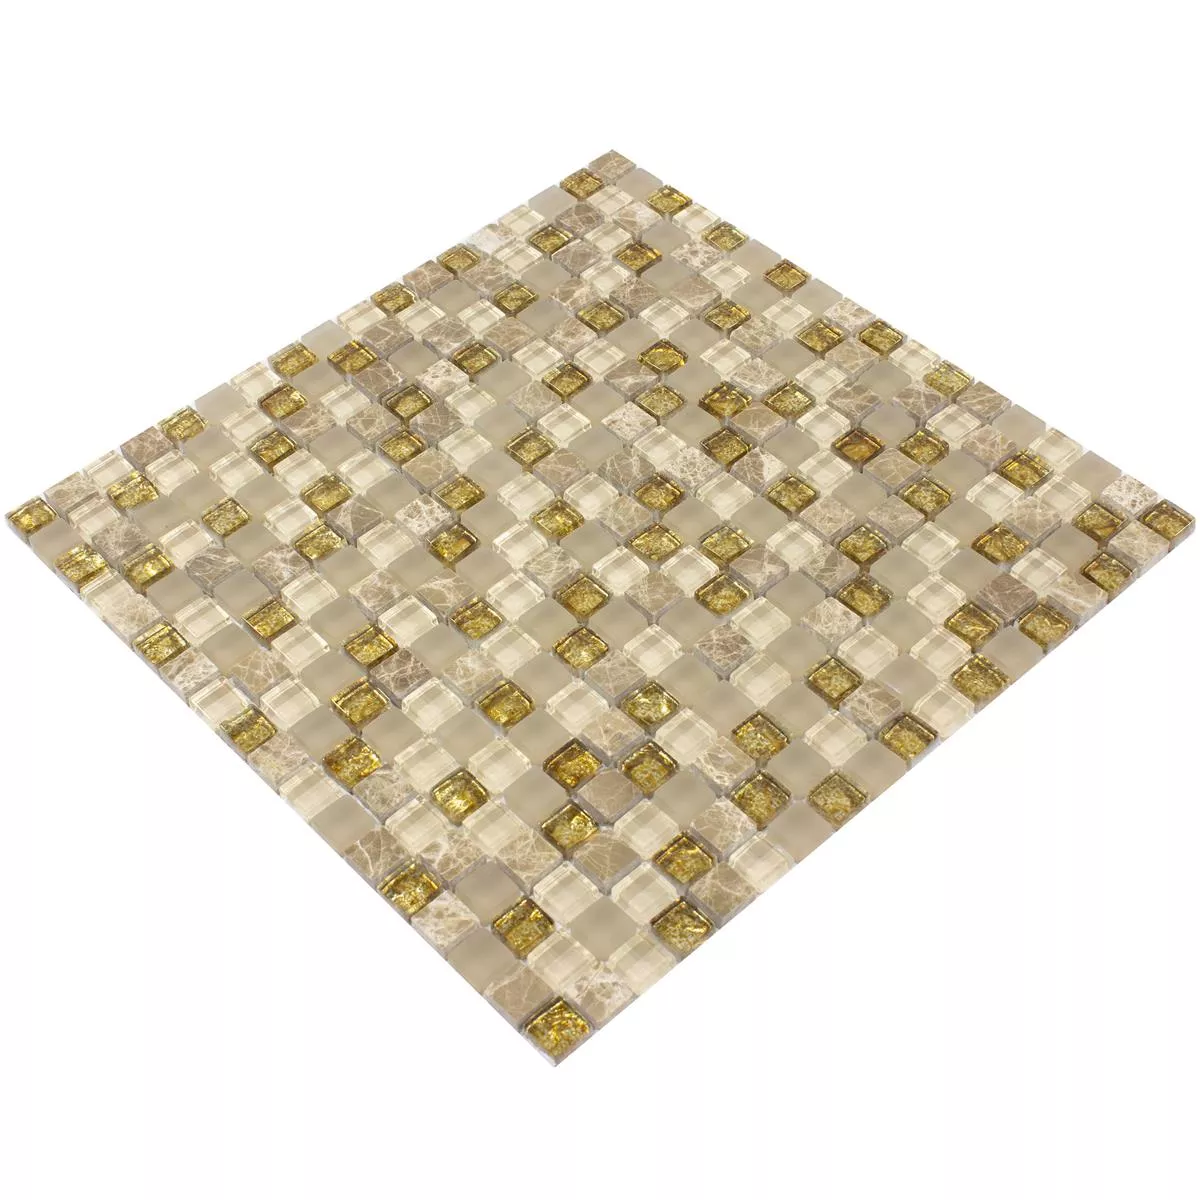 Sample Glass Mosaic Tiles Lexington Glass Material Mix Brown